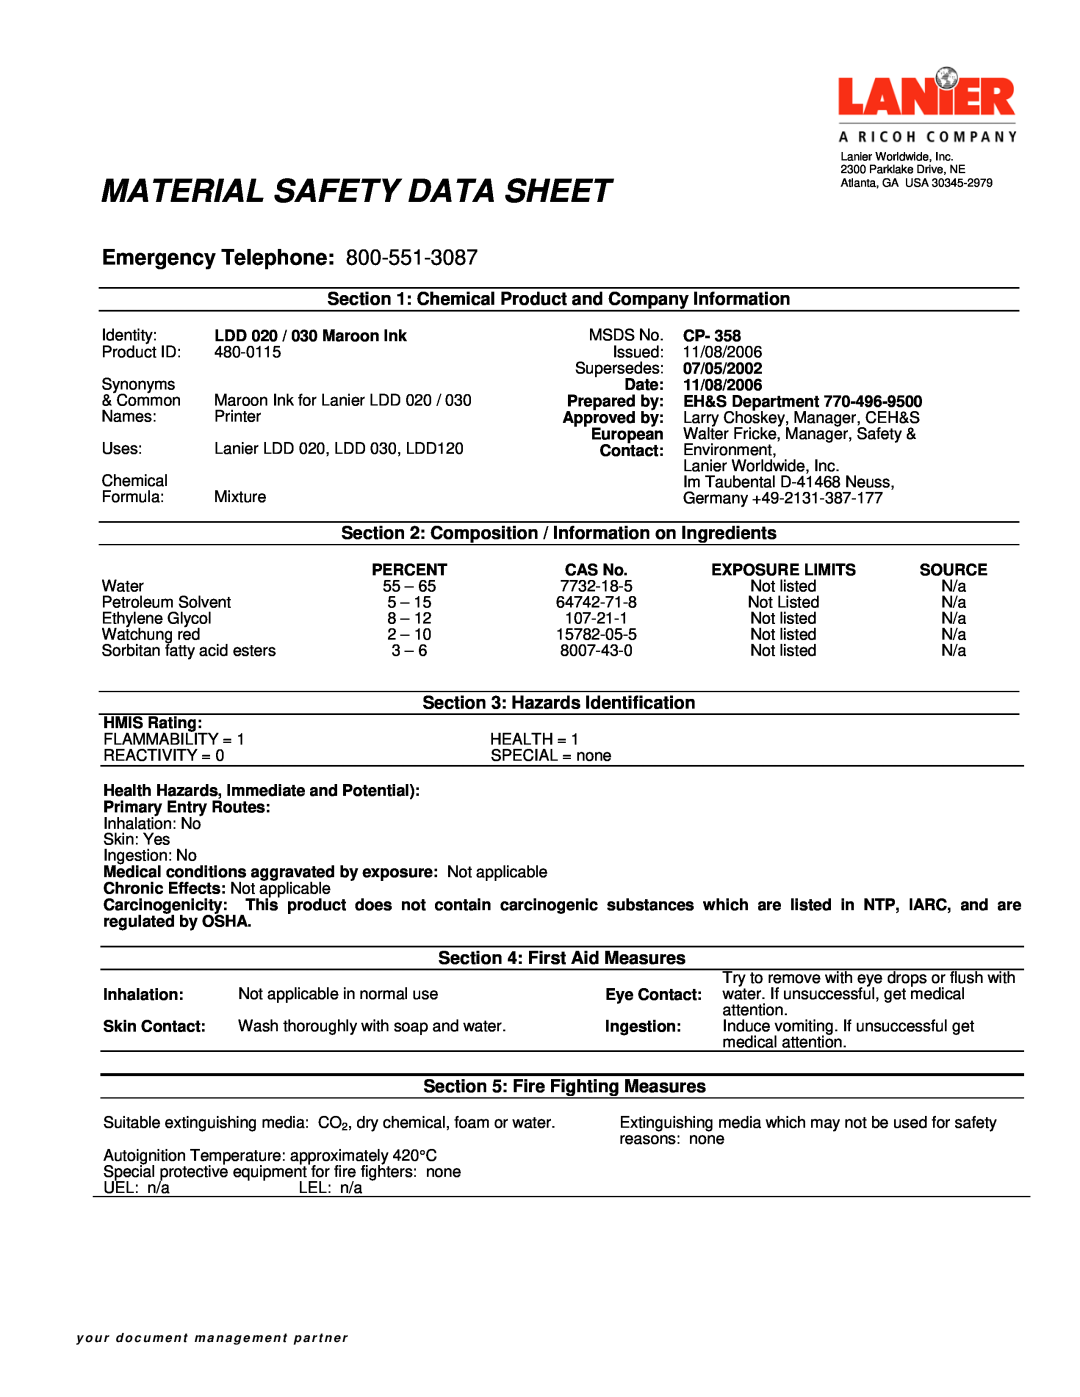 Lanier 60 manual Material Safety Data Sheet, Emergency Telephone 